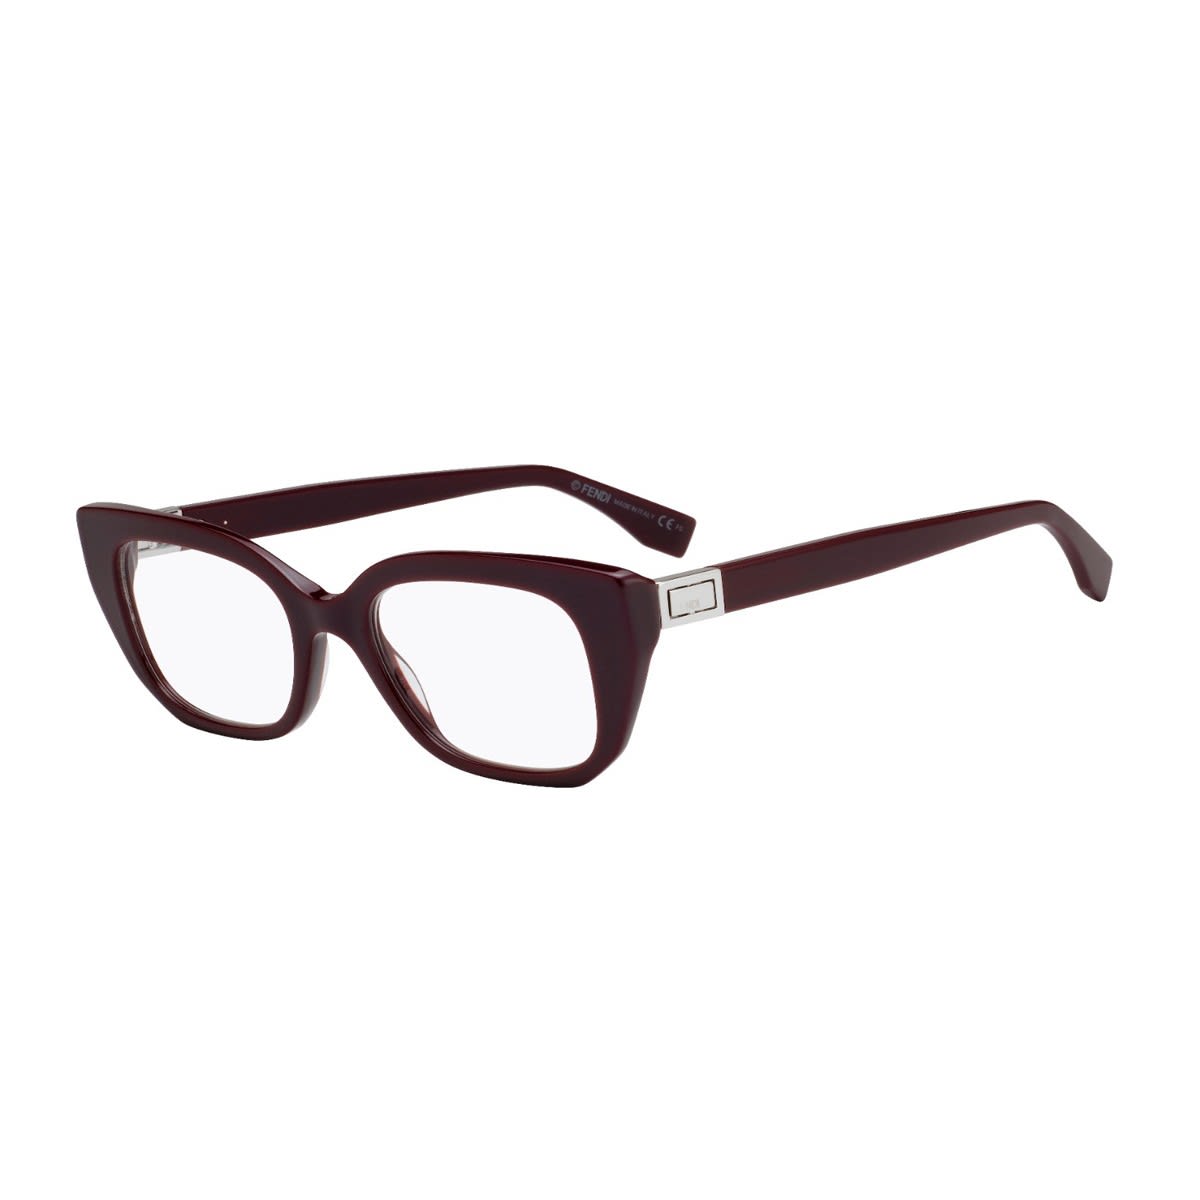 Fendi Eyewear Ff 0274 Glasses